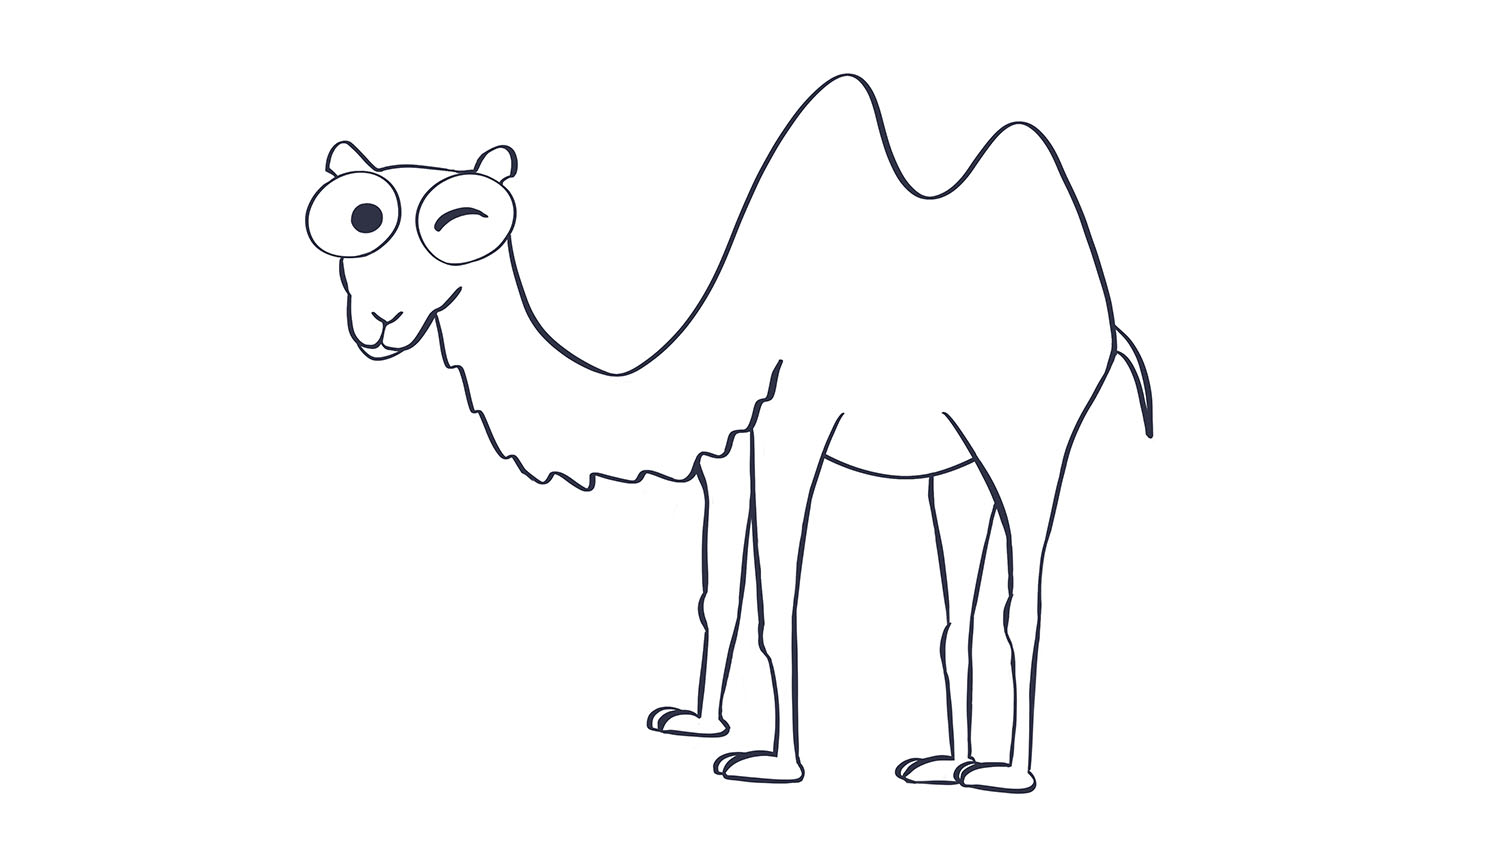 56. Camello / Camel. 103dibujos